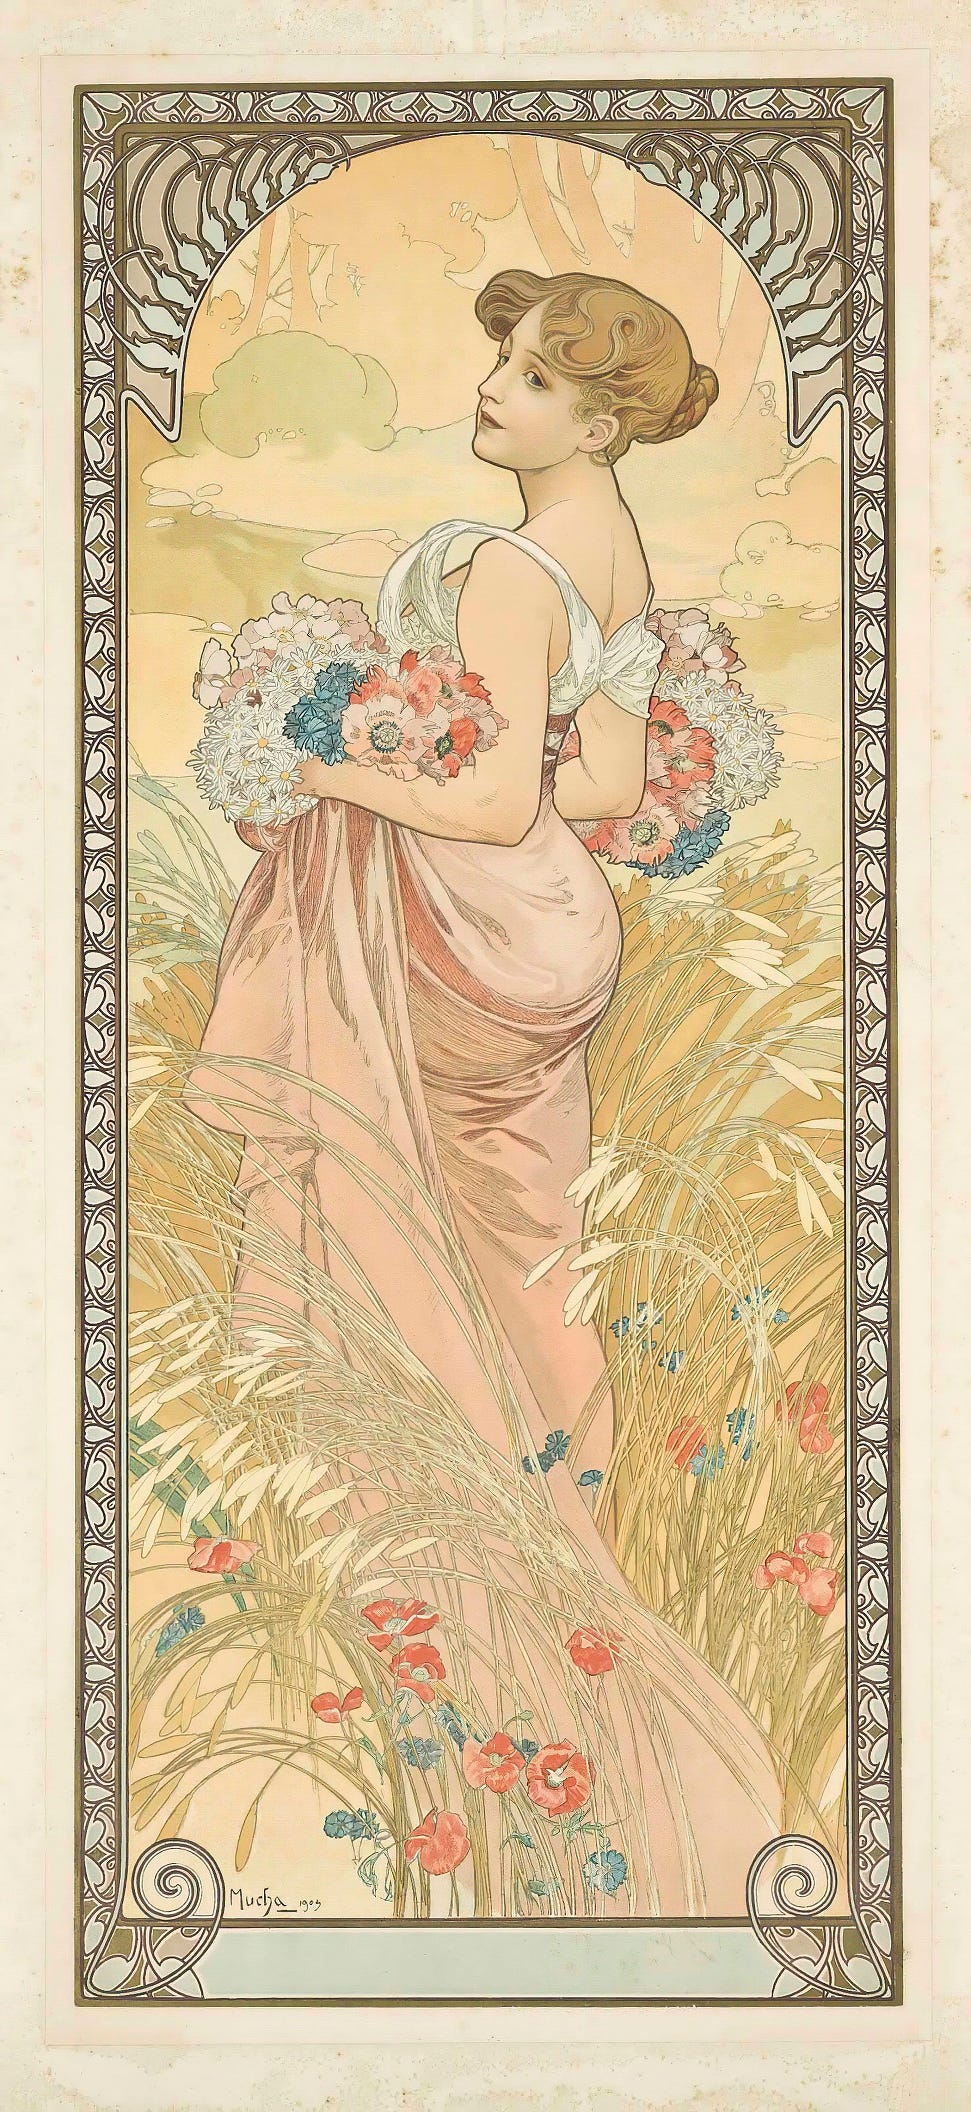 Summer (1900)by Alphonse Mucha